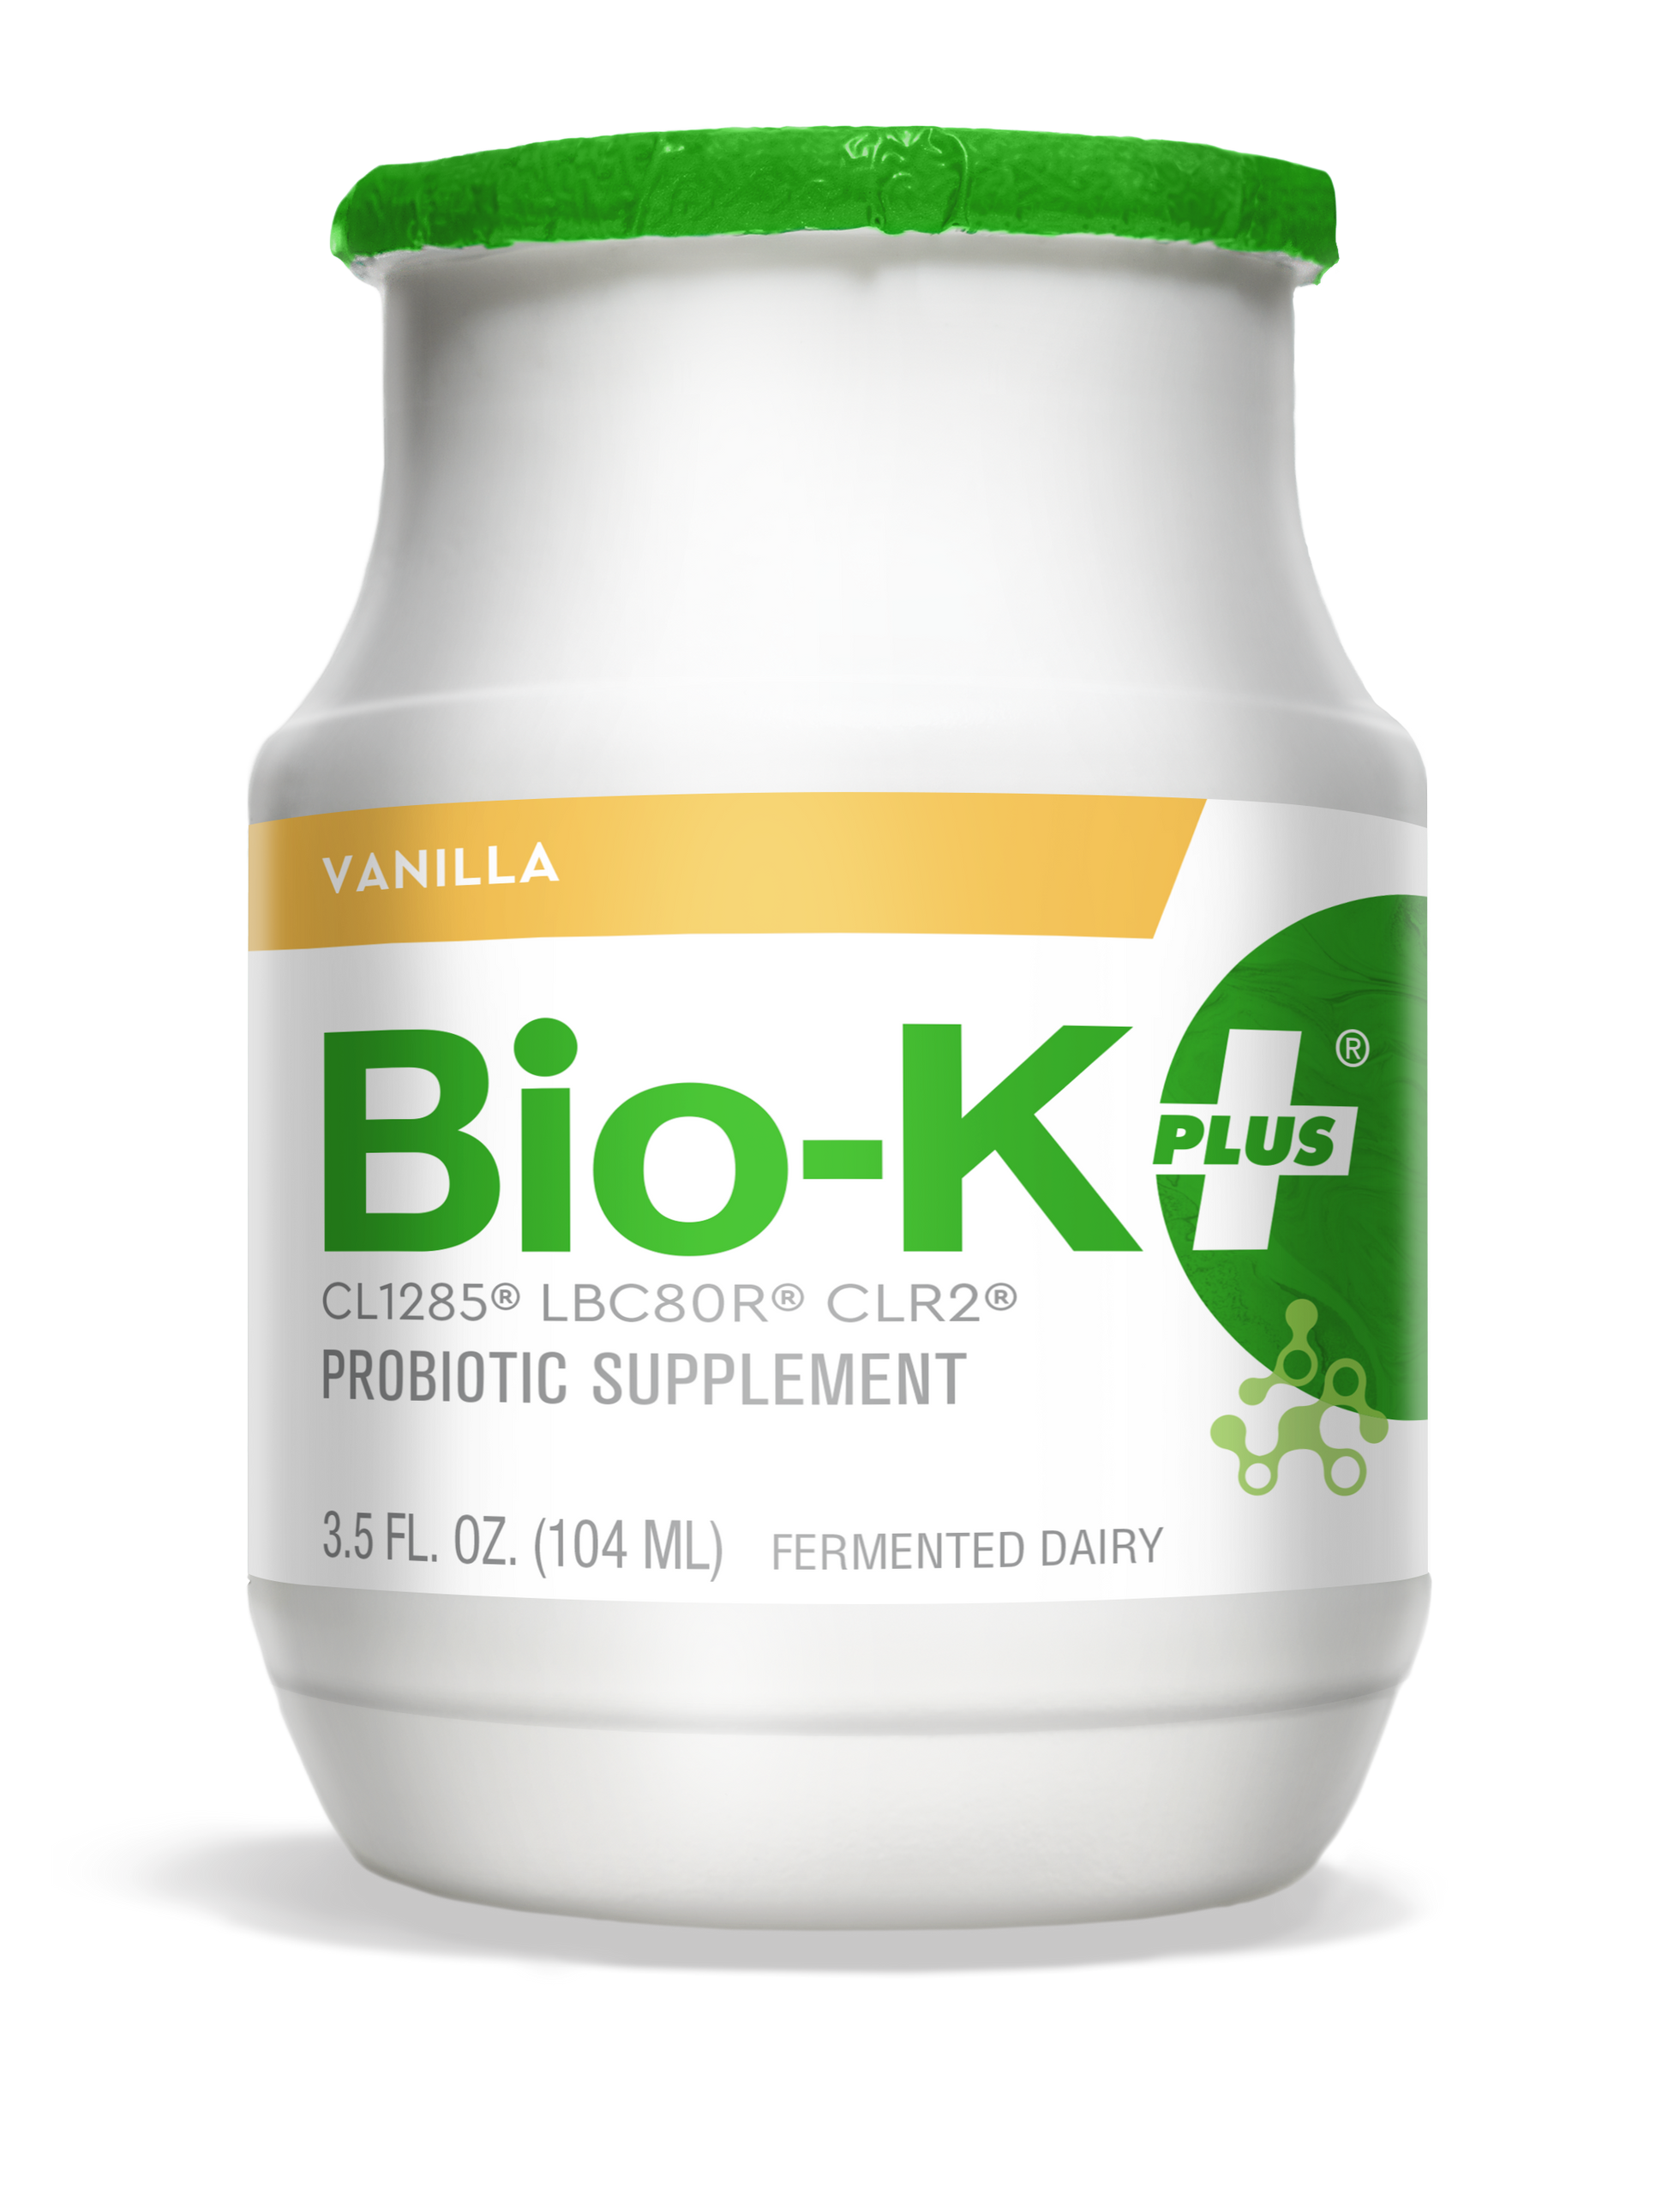 Bottle of Bio-K+ Vanilla FERMENTED DAIRY DRINKABLE PROBIOTIC